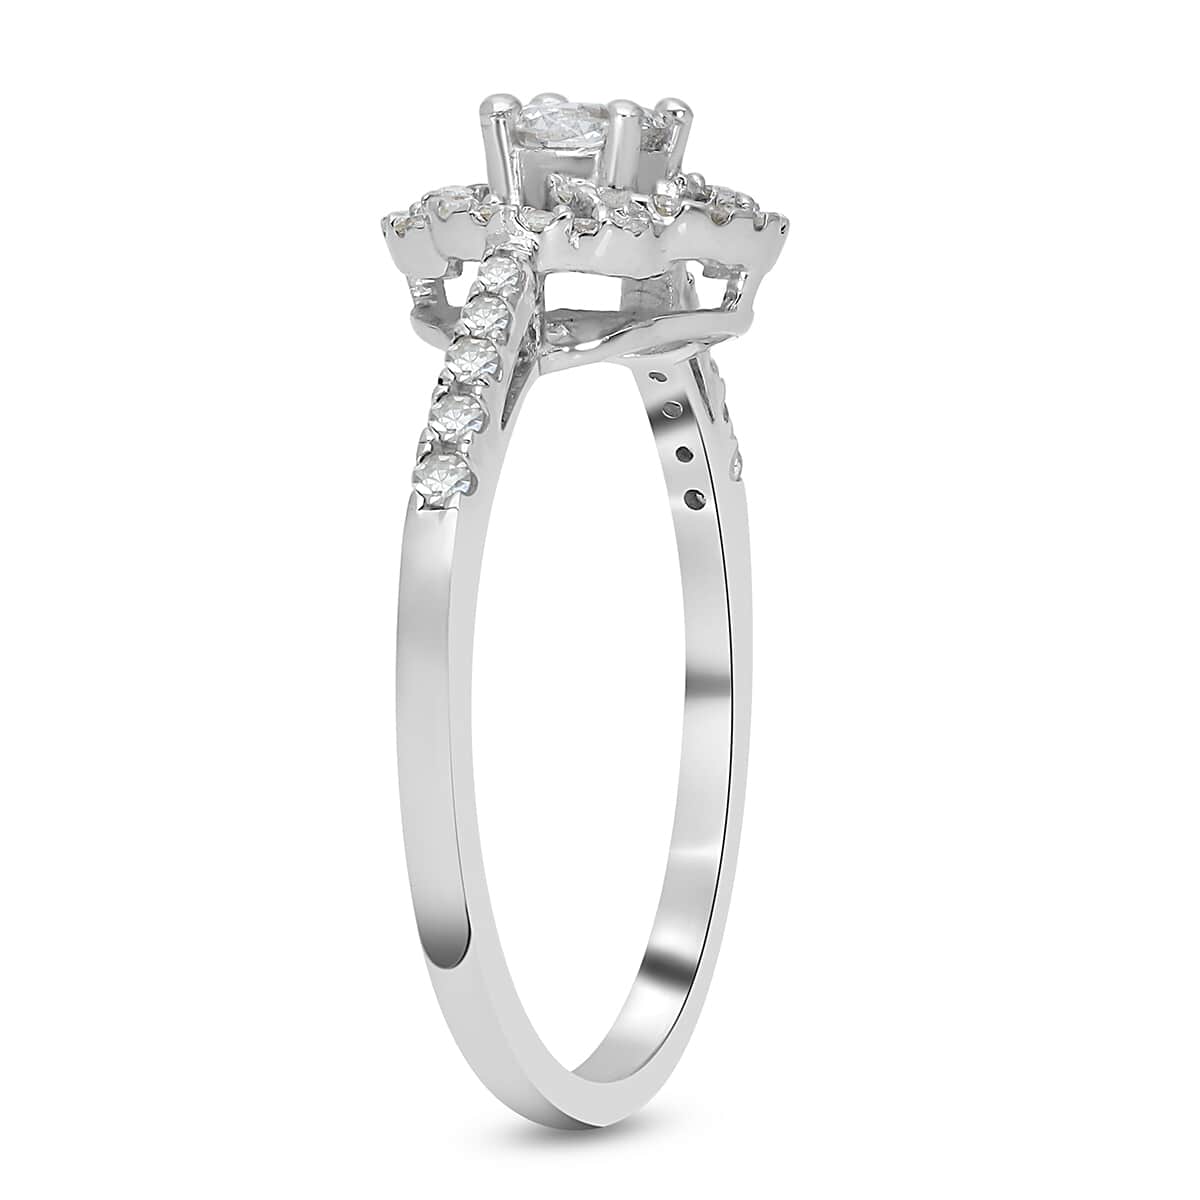 Luxoro 10K White Gold G-H I2-I3 Diamond Ring, Promise Rings (Size 7.0) 0.50 ctw image number 3